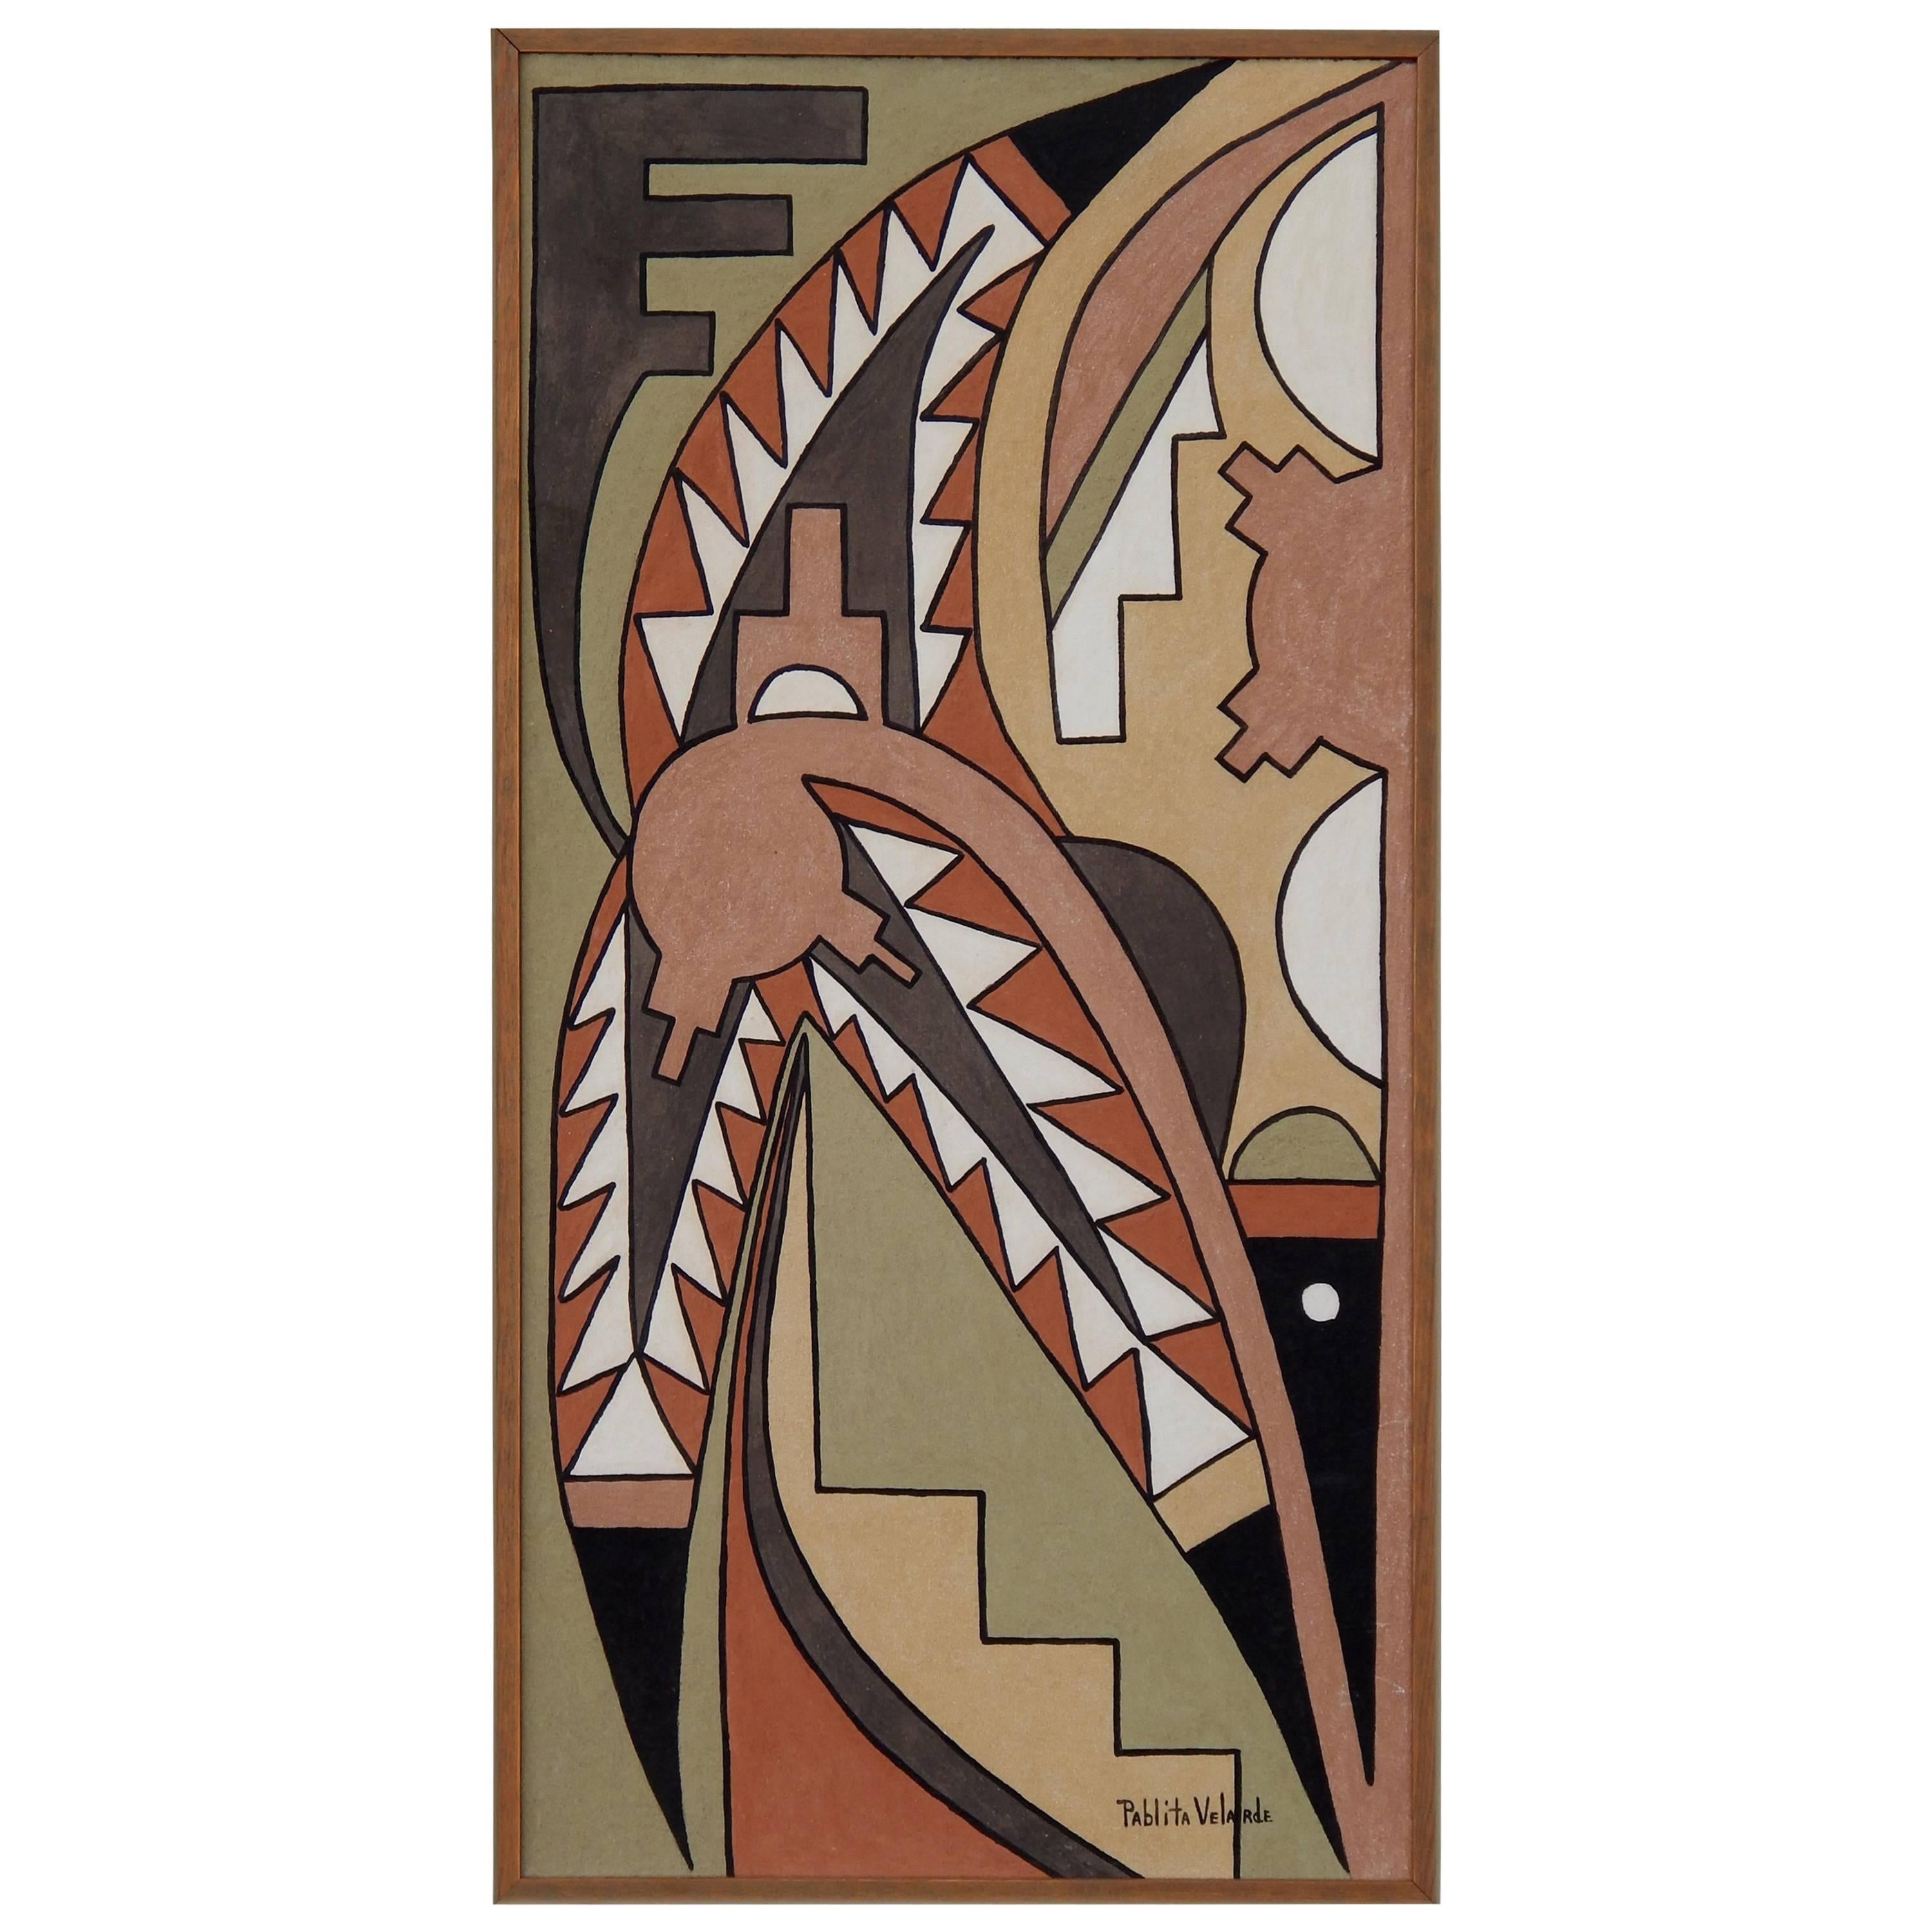 Pablita Velarde Pigment Painting with Native American Deco Motif, 1940s-1950s